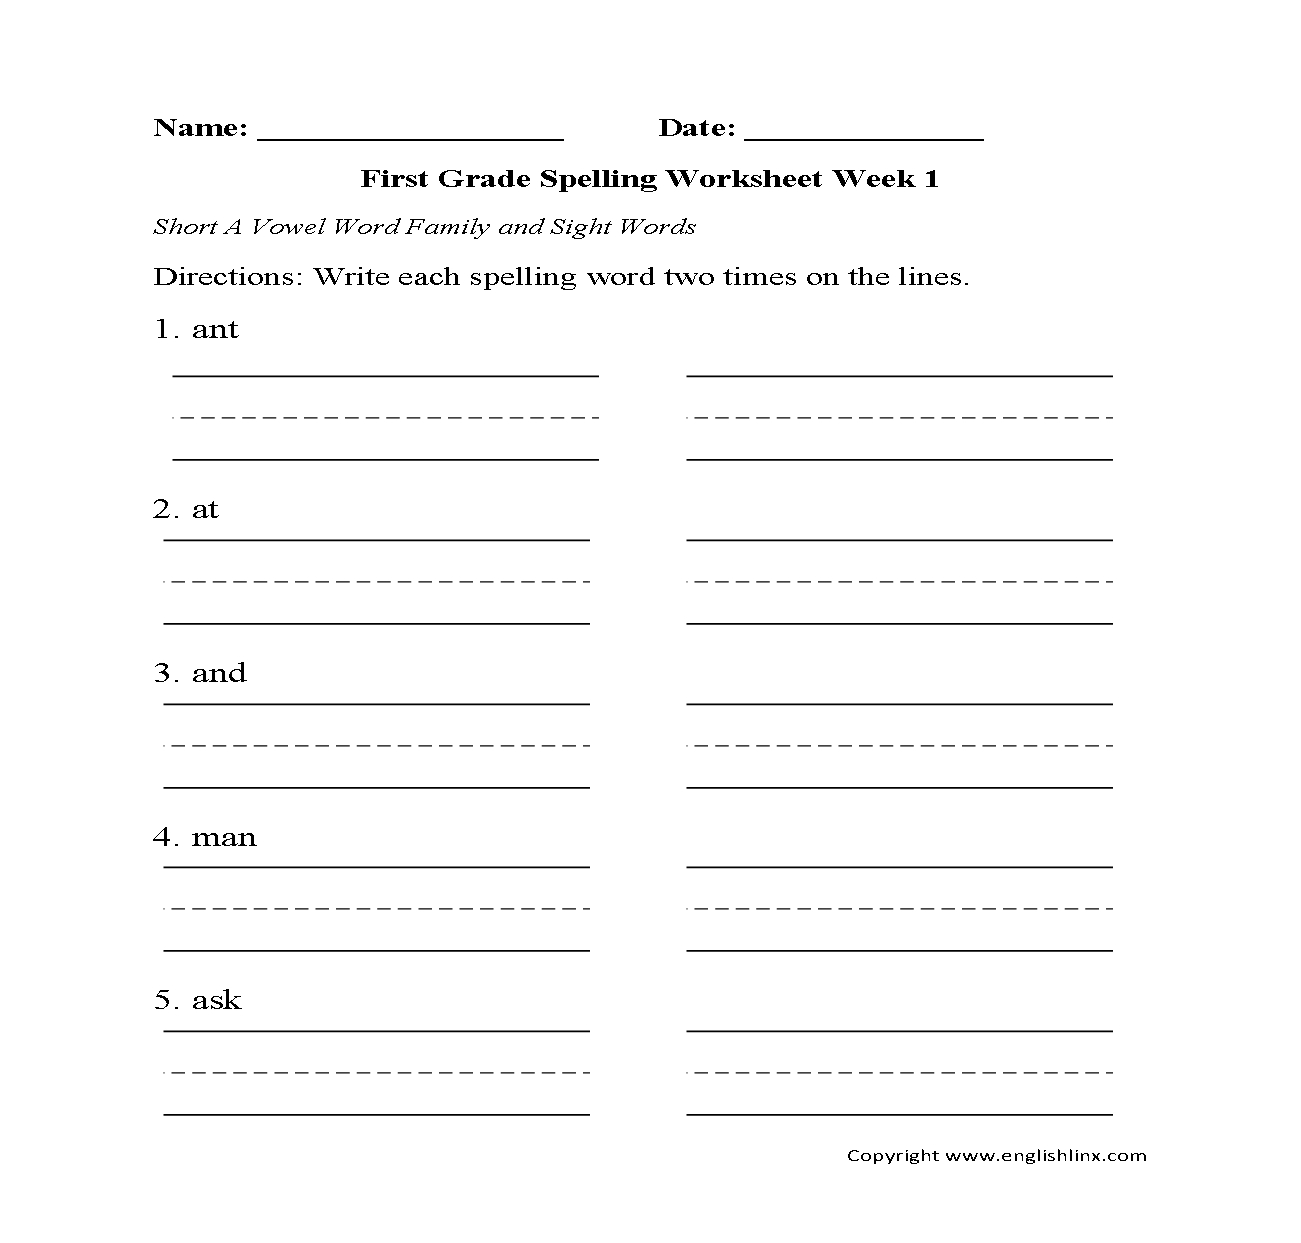 Spelling Worksheets  First Grade Spelling Worksheets Regarding First Grade Spelling Worksheets